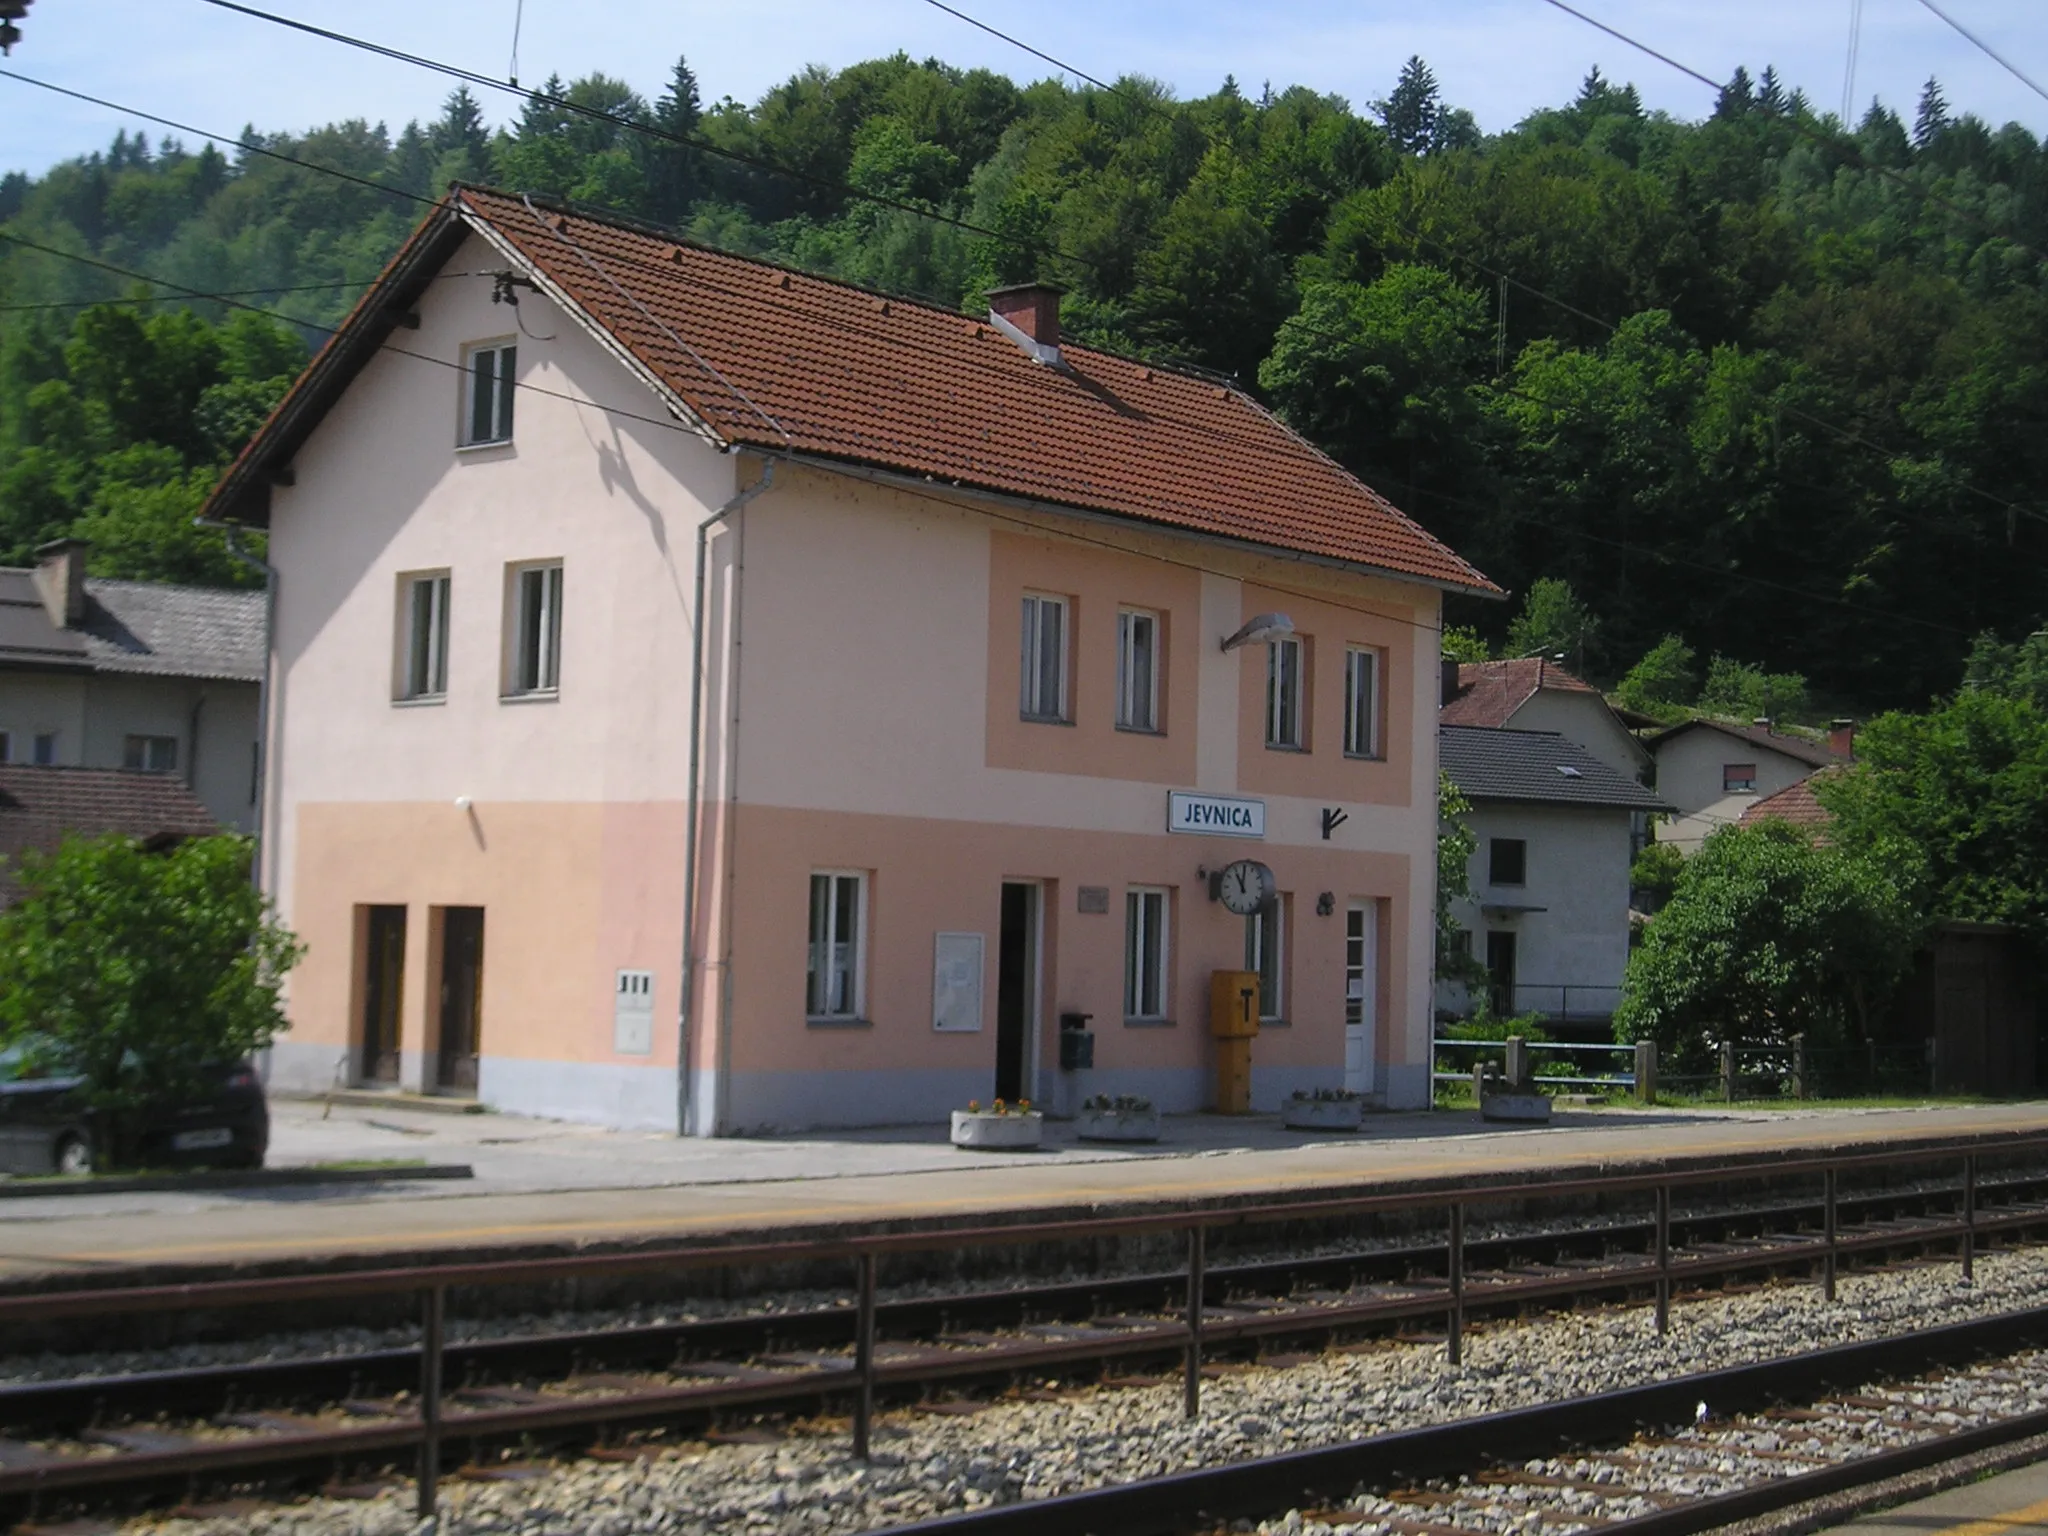 Photo showing: Railway halt in Jevnica, Slovenia